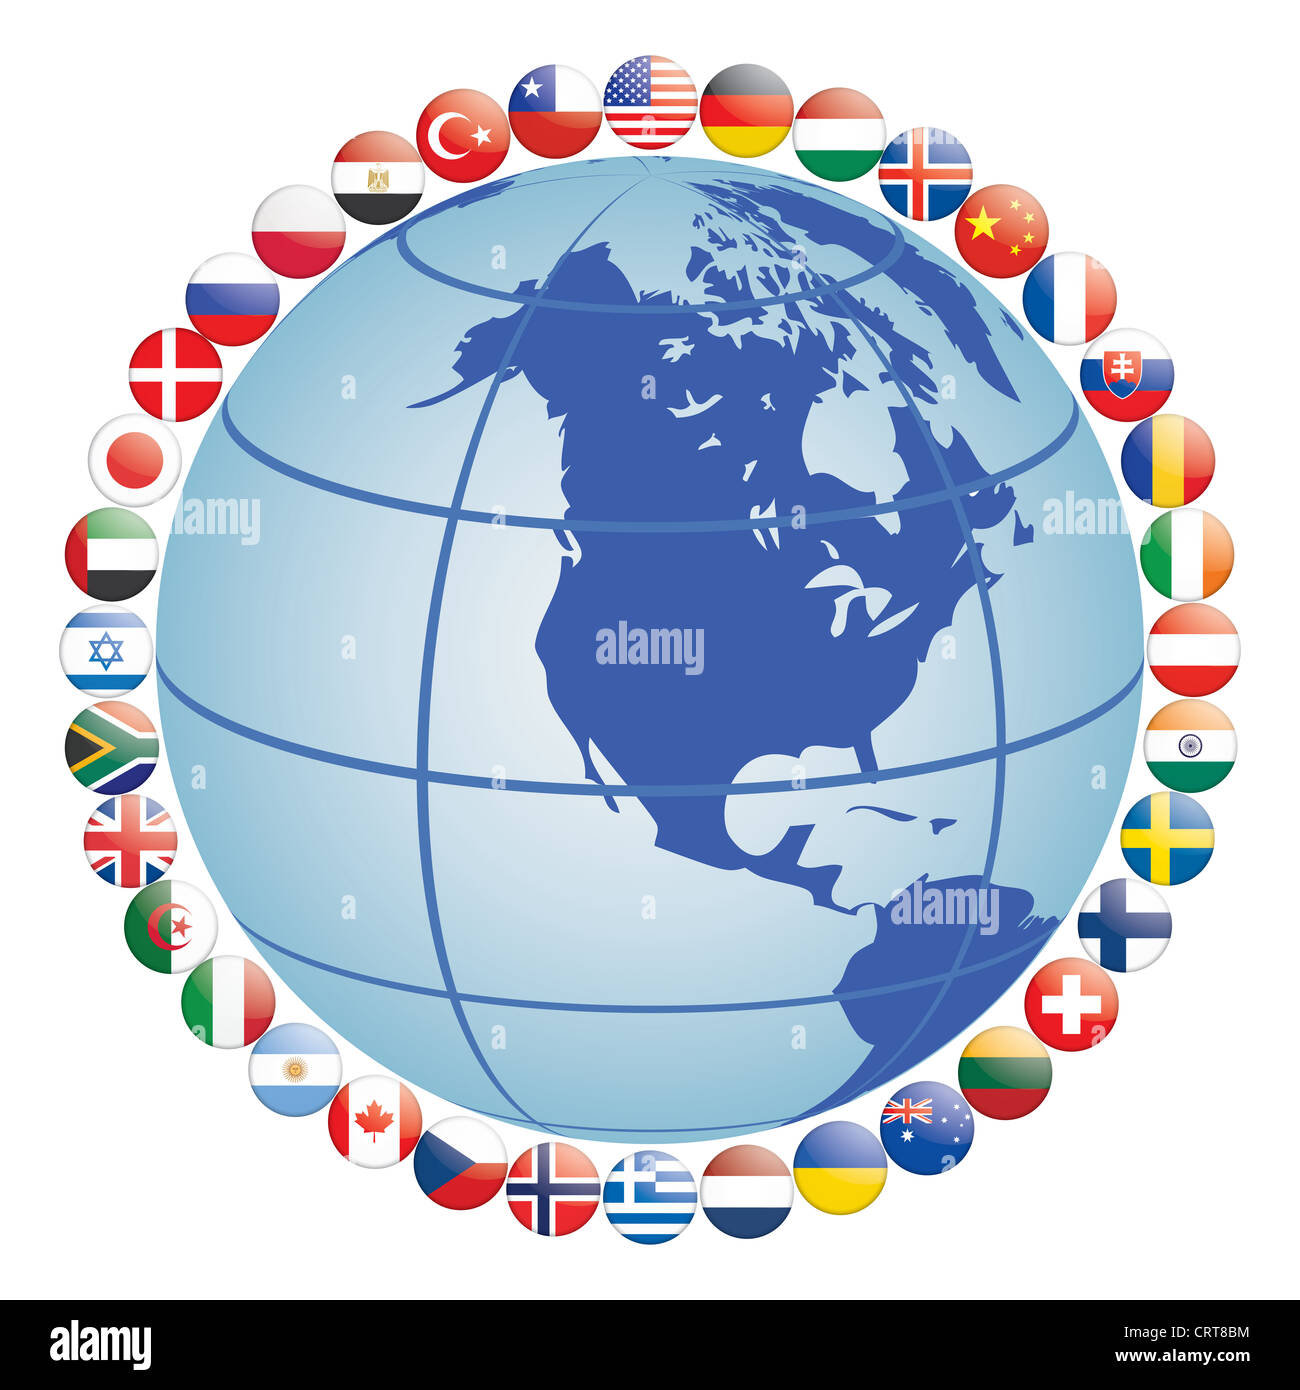 flag icons around globe vector illustration Stock Photo